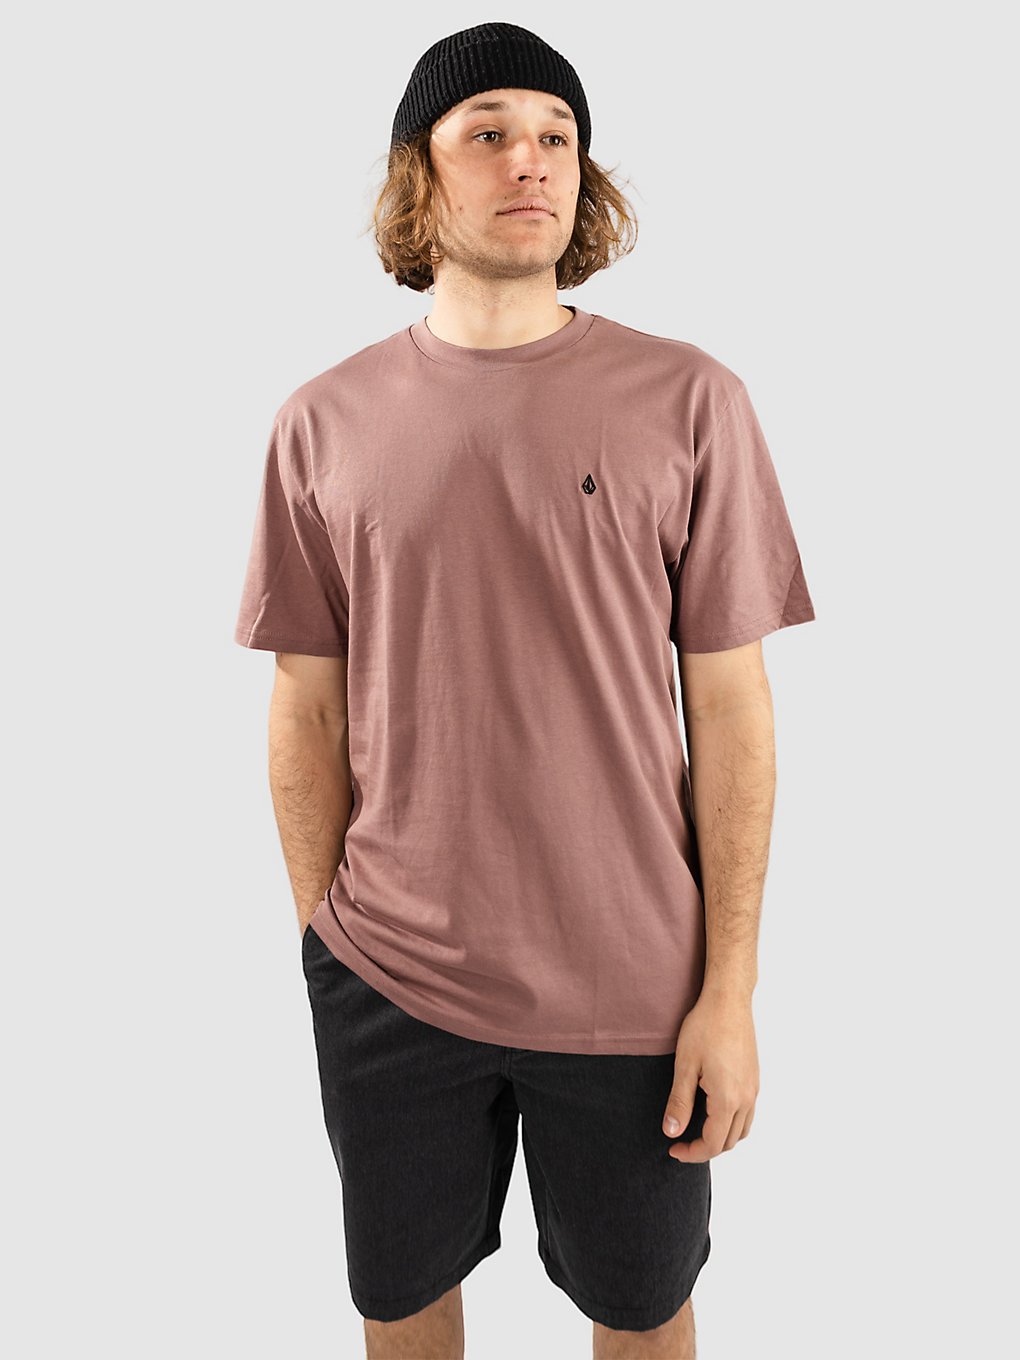 Volcom Stone Blanks Bsc T-Shirt bordeaux brown kaufen